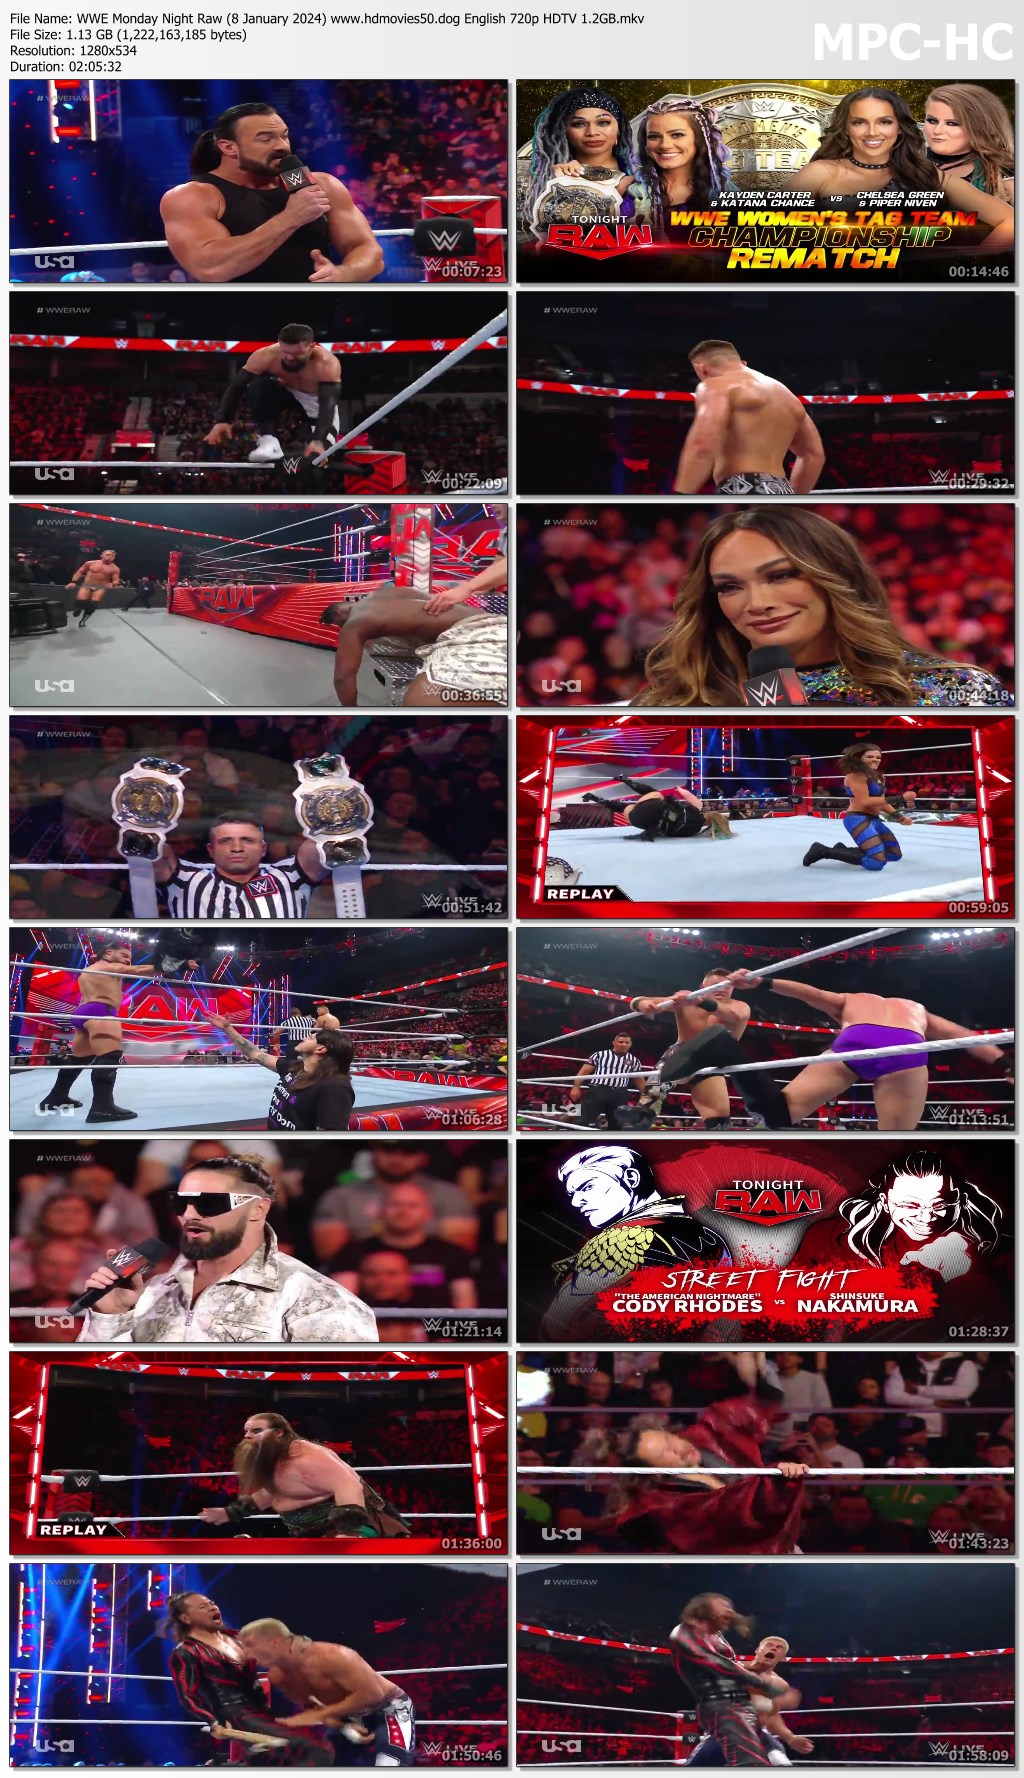 WWE Monday Night Raw 8 January 2024 www.hdmovies50.dog English 720p HDTV 1.2GB.mkv thumbs